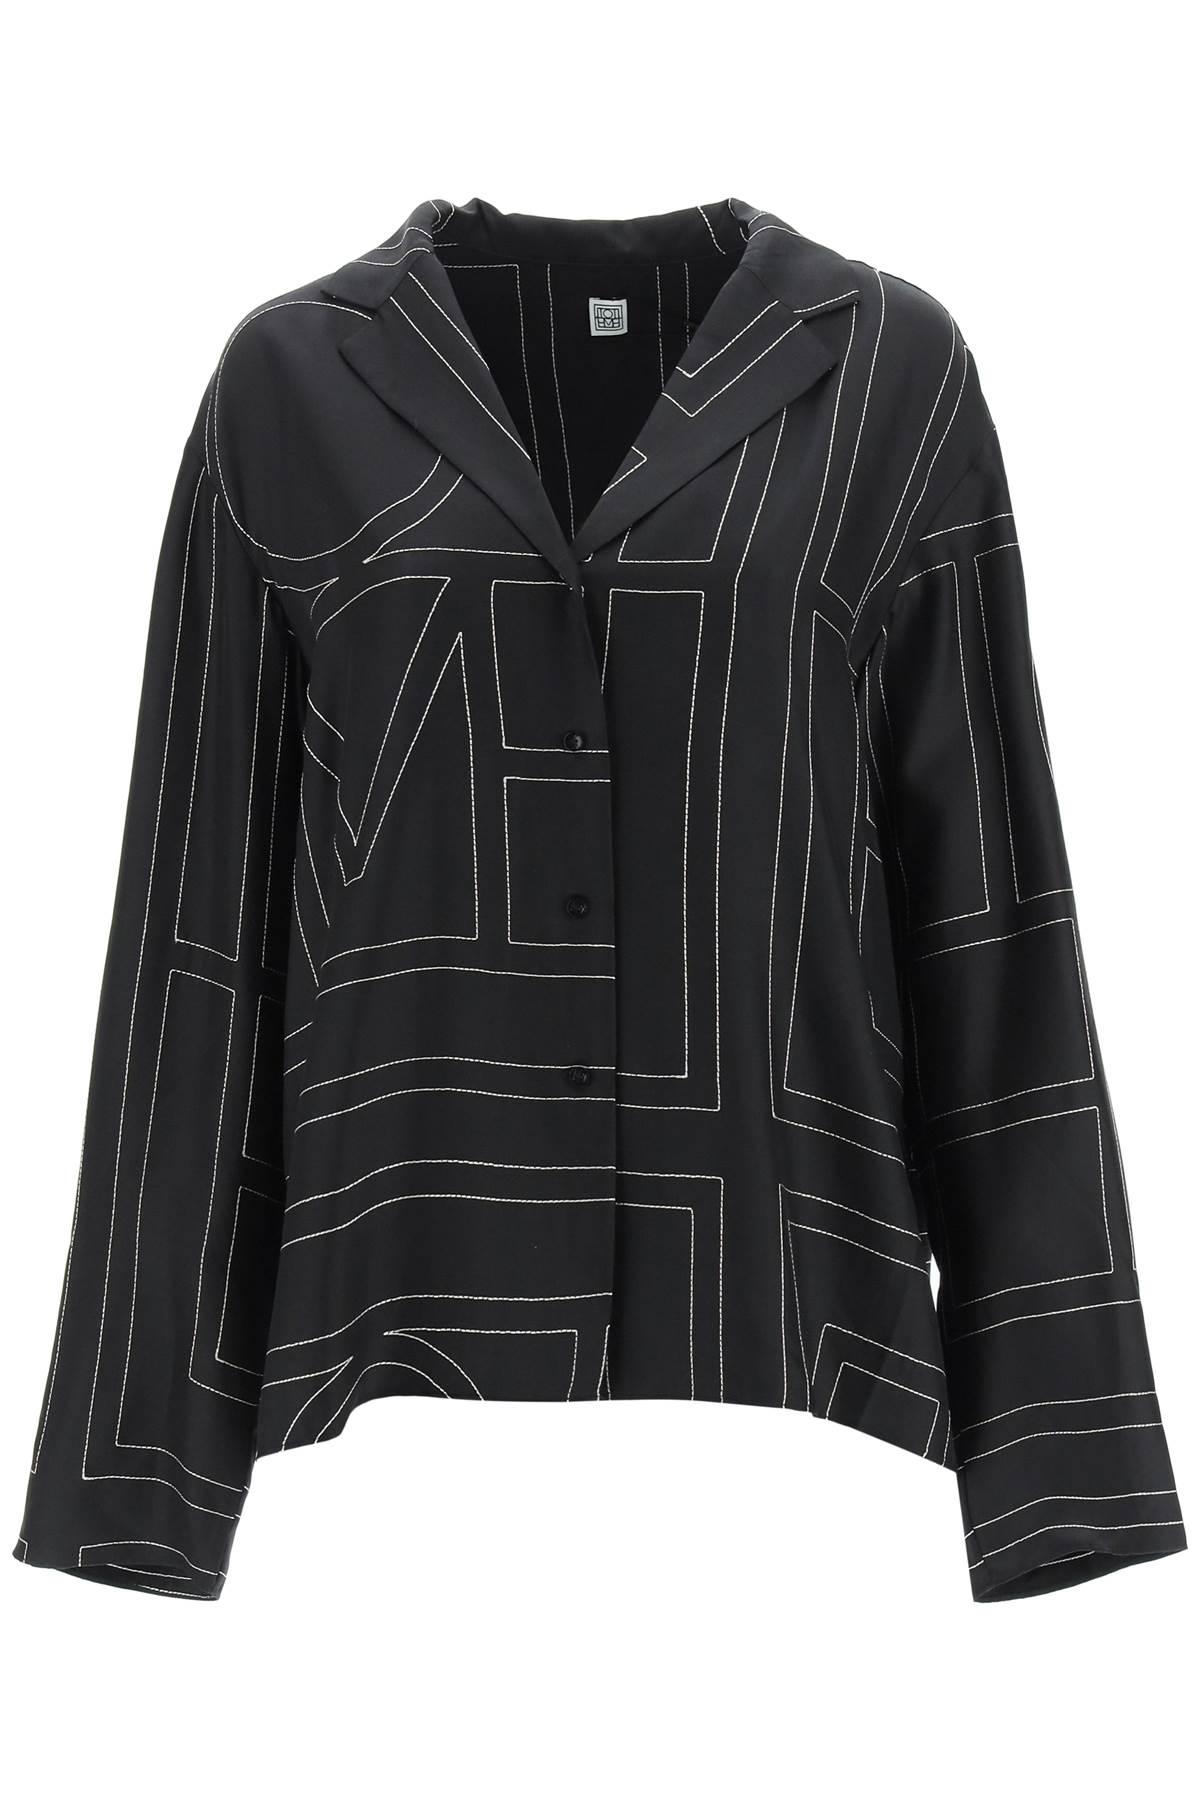 TOTEME - TOTEME Monogram Silk Pajama Top in Black Monogram 40 / 8 US - Hampden Clothing